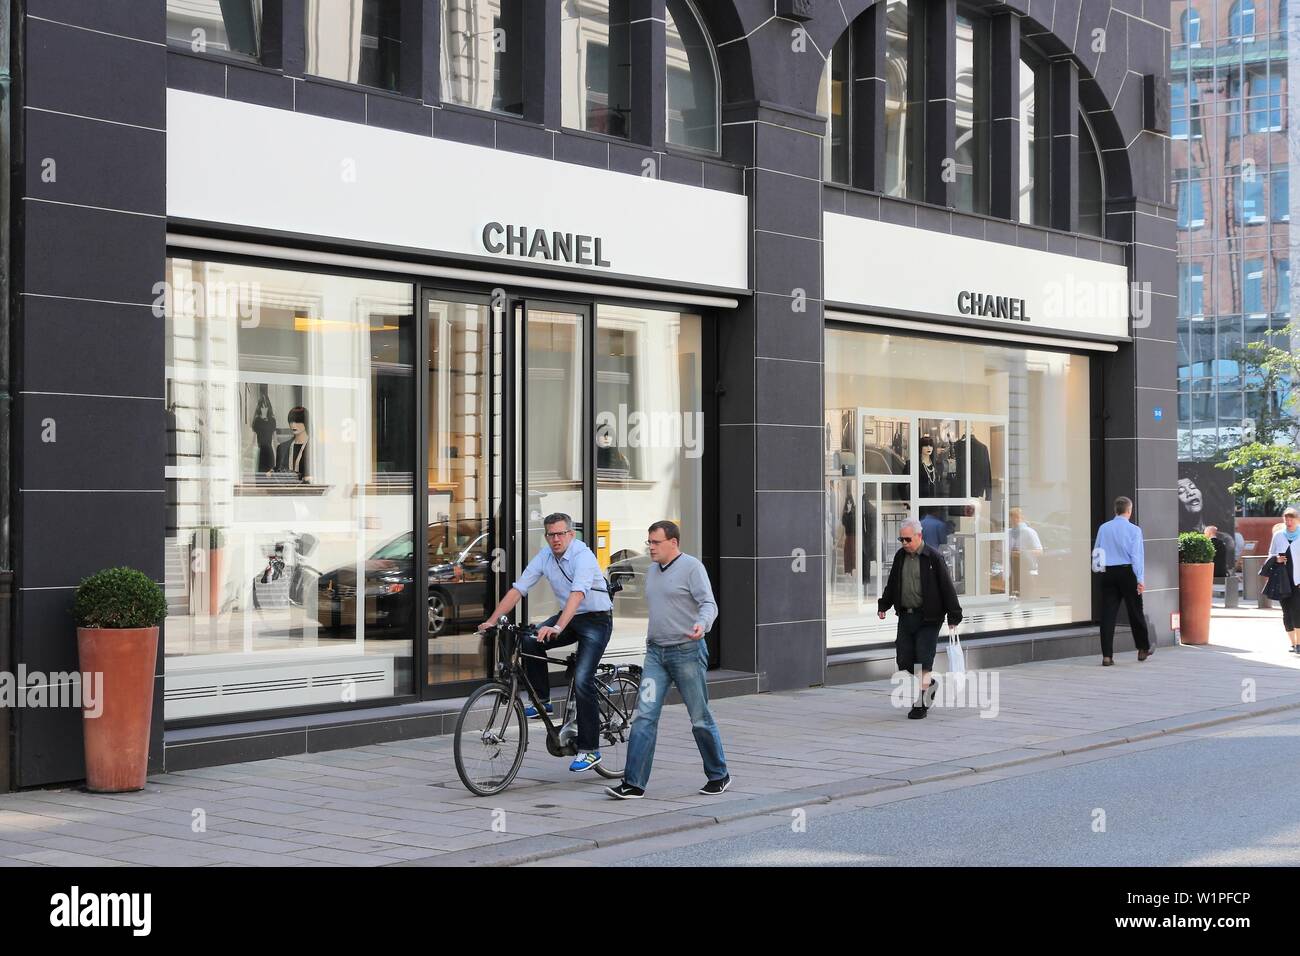 HAMBURG, GERMANY - 28, 2014: Chanel fashion shop in Hamburg. famous brand exists since 1909 Stock Photo - Alamy